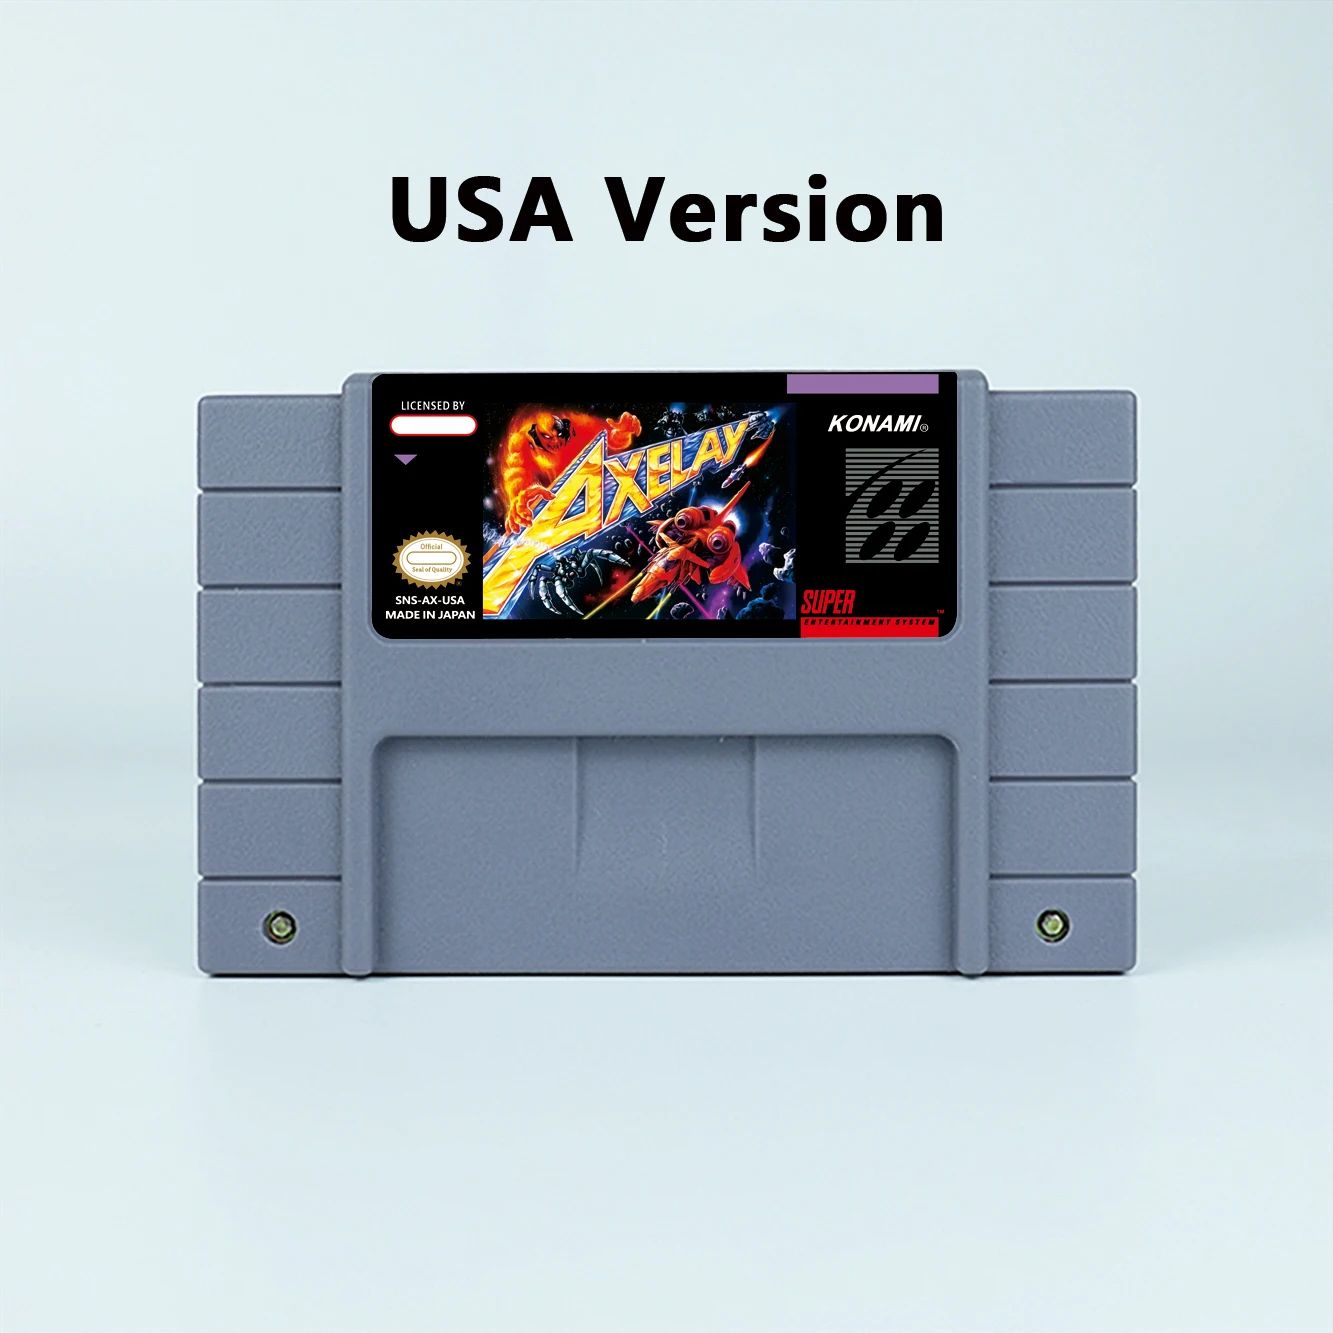 Color:USA version